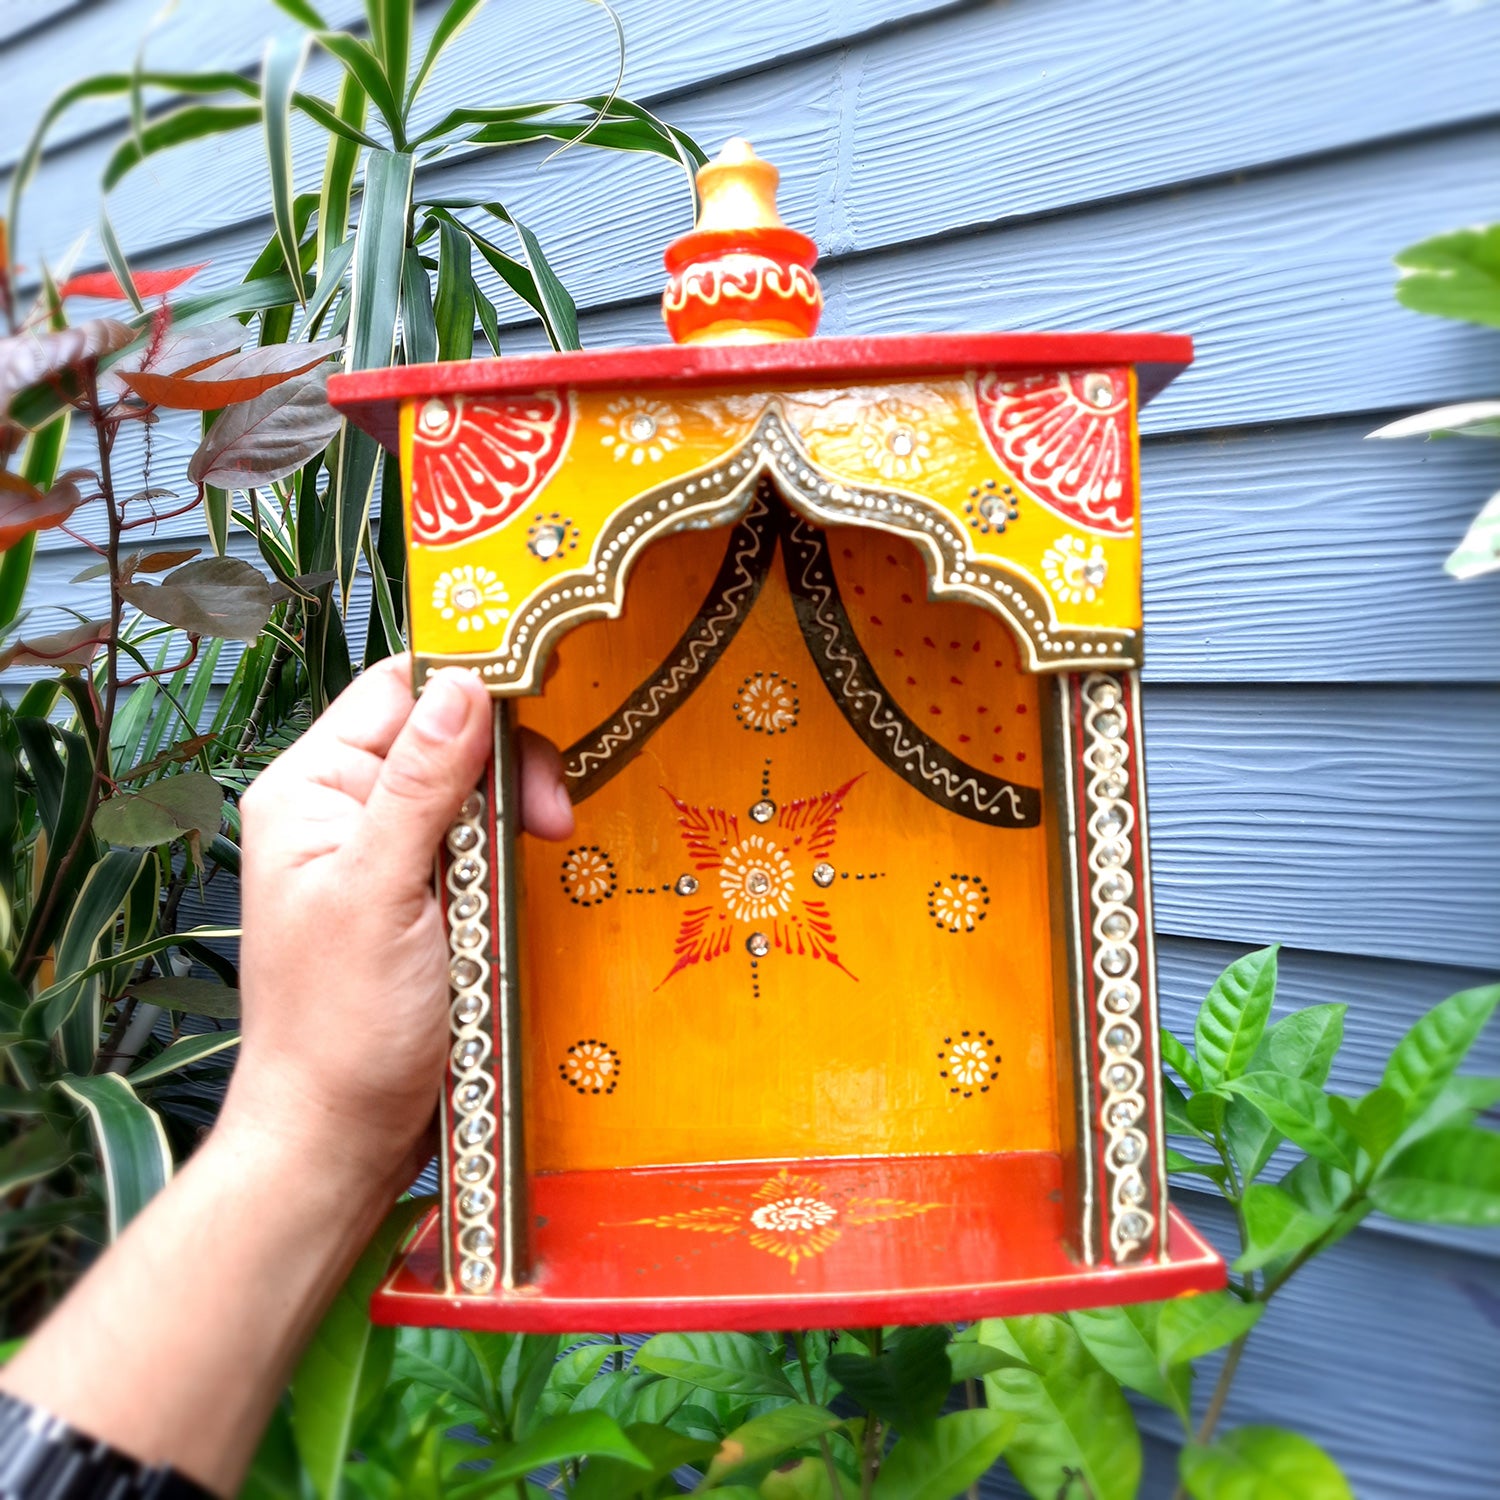 Pooja Mandir | Wall Mounted Wooden Pooja Mandir for Home - 13 Inch- Apkamart